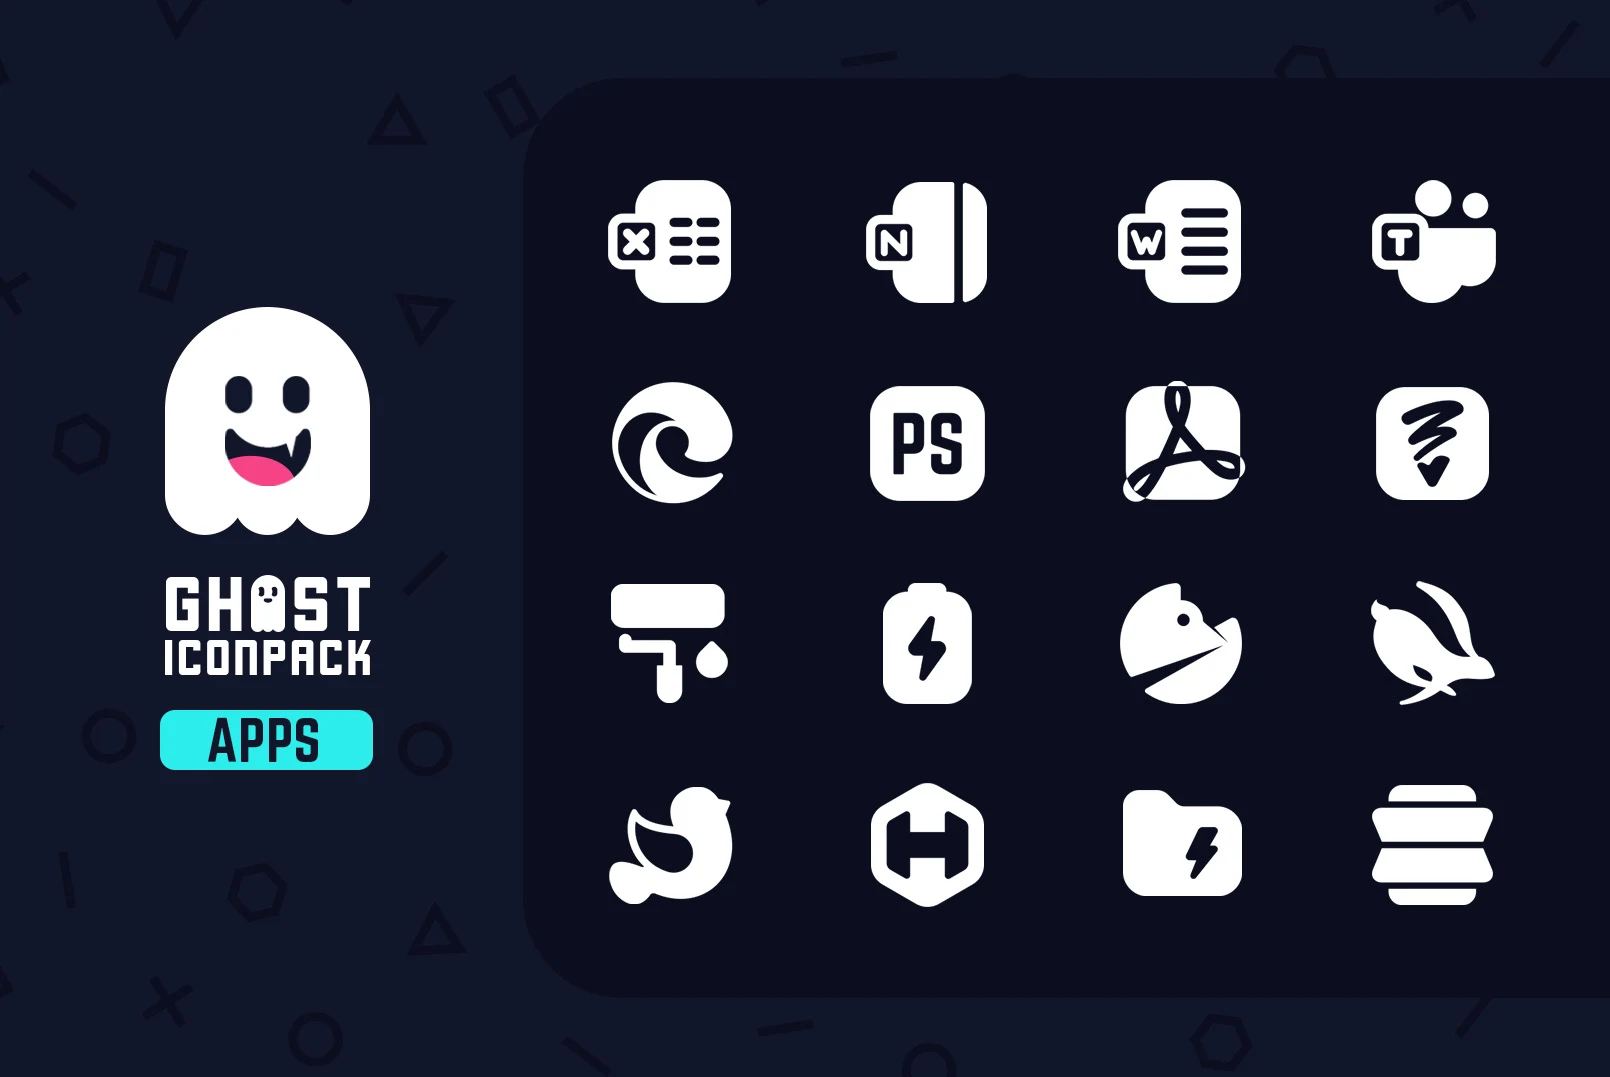 Ghost IconPack Mod Apk TechToDown